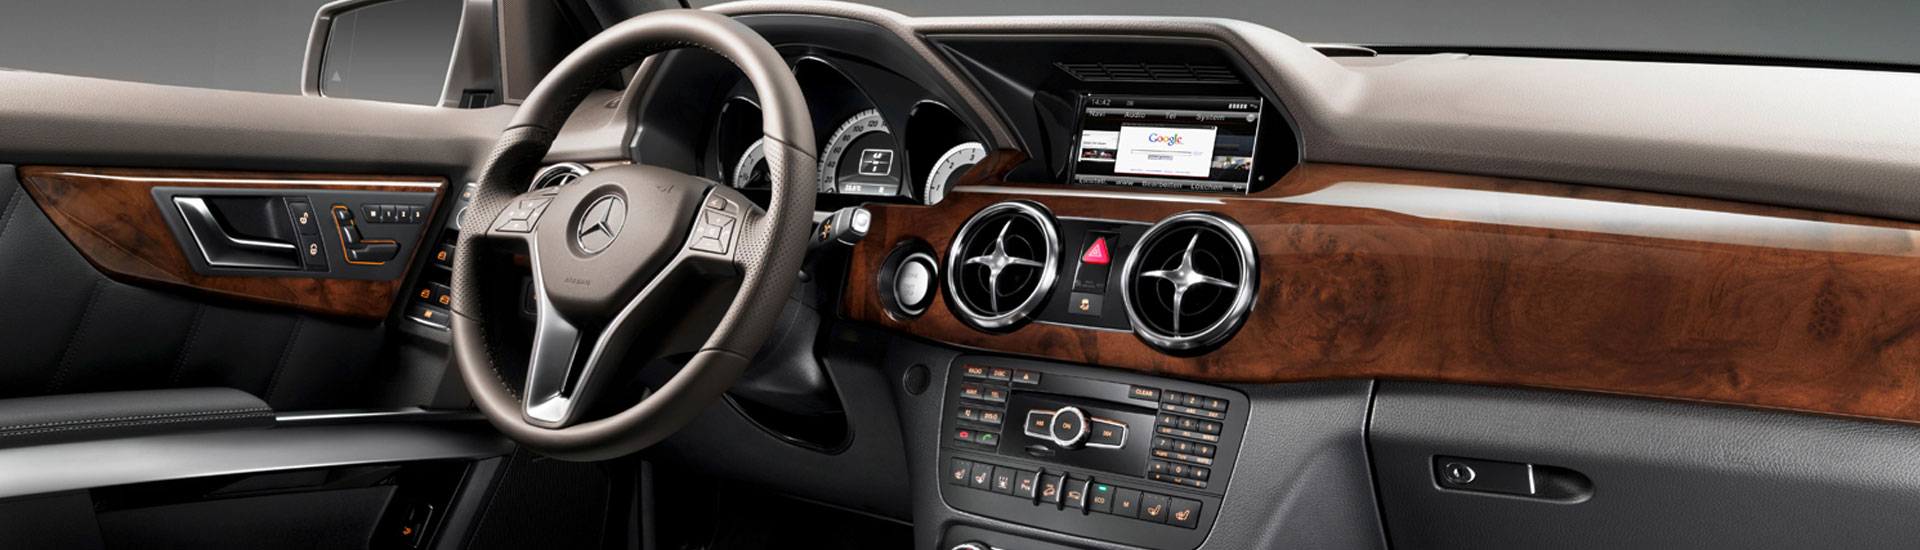 Wood dash kit inside Mercedes